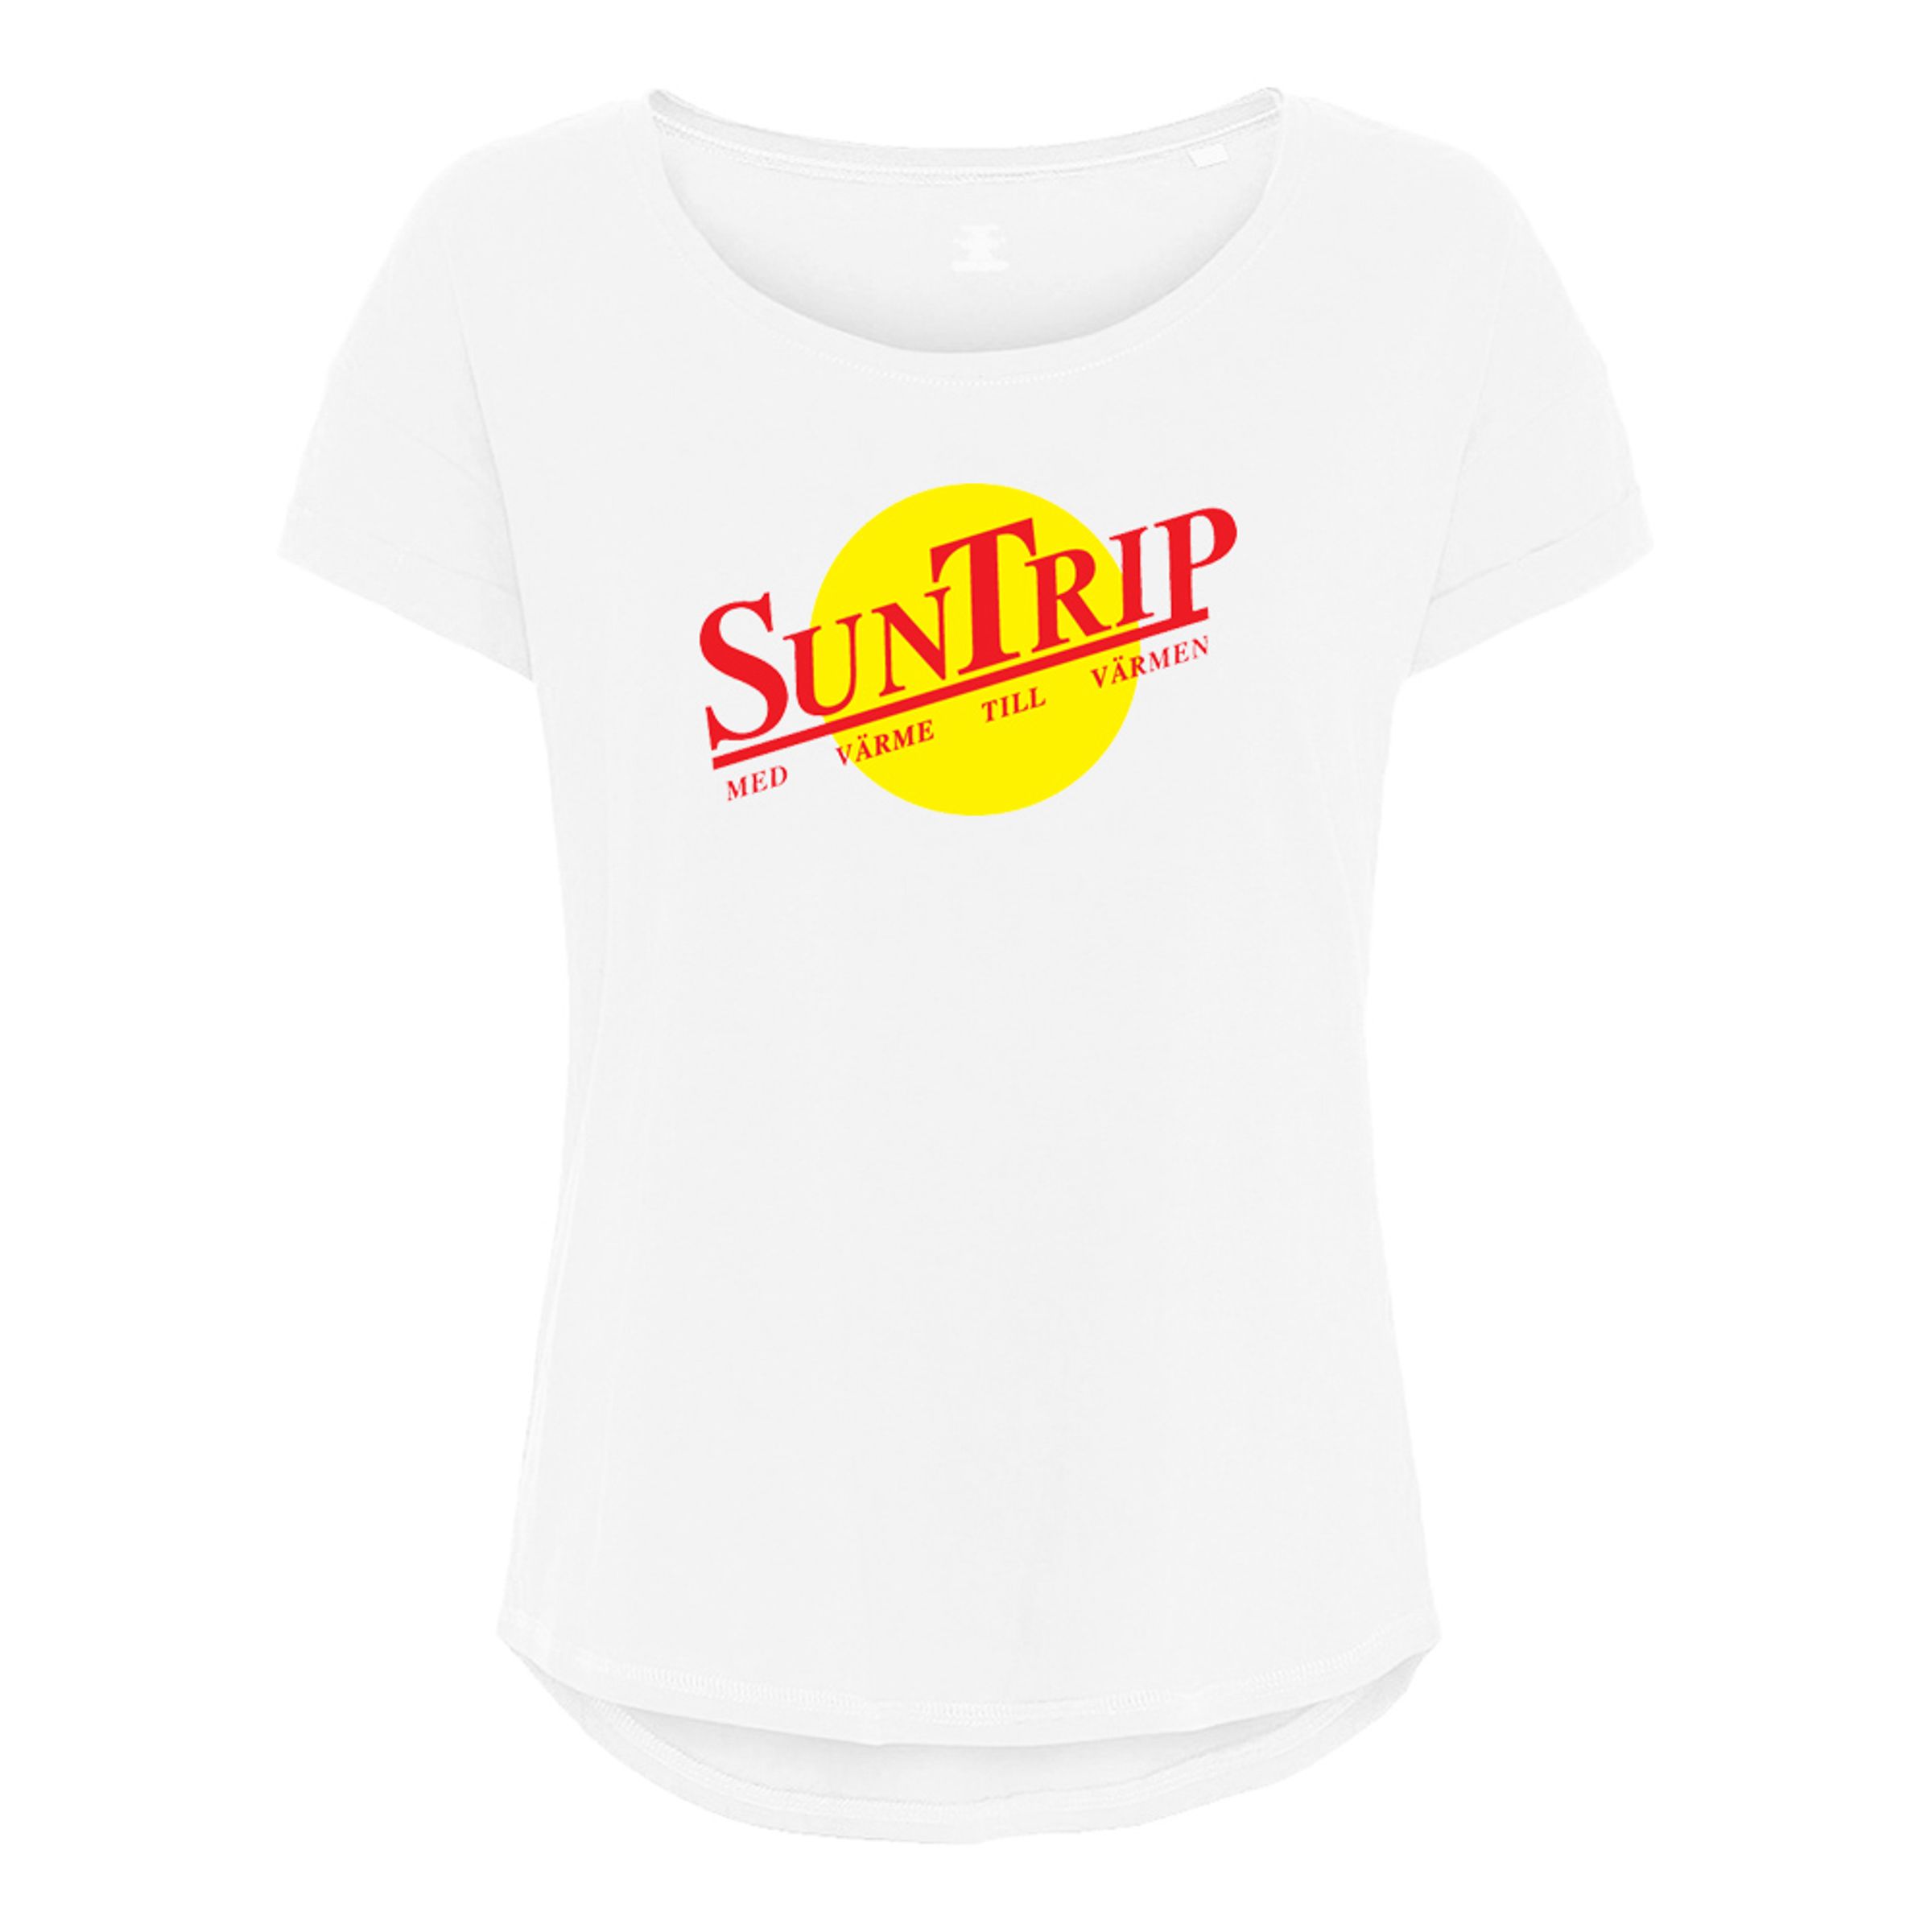 SunTrip Dam T-shirt - Small